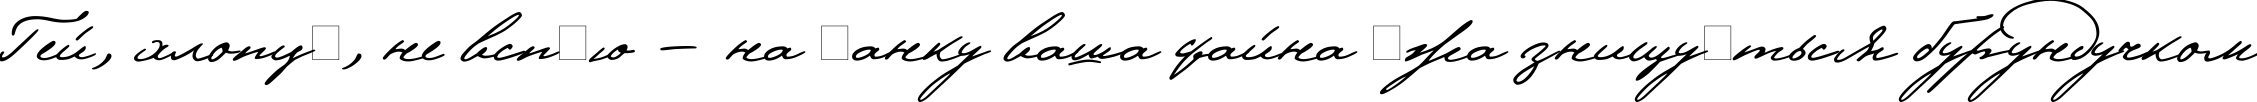 Пример написания шрифтом Pushkin текста на украинском